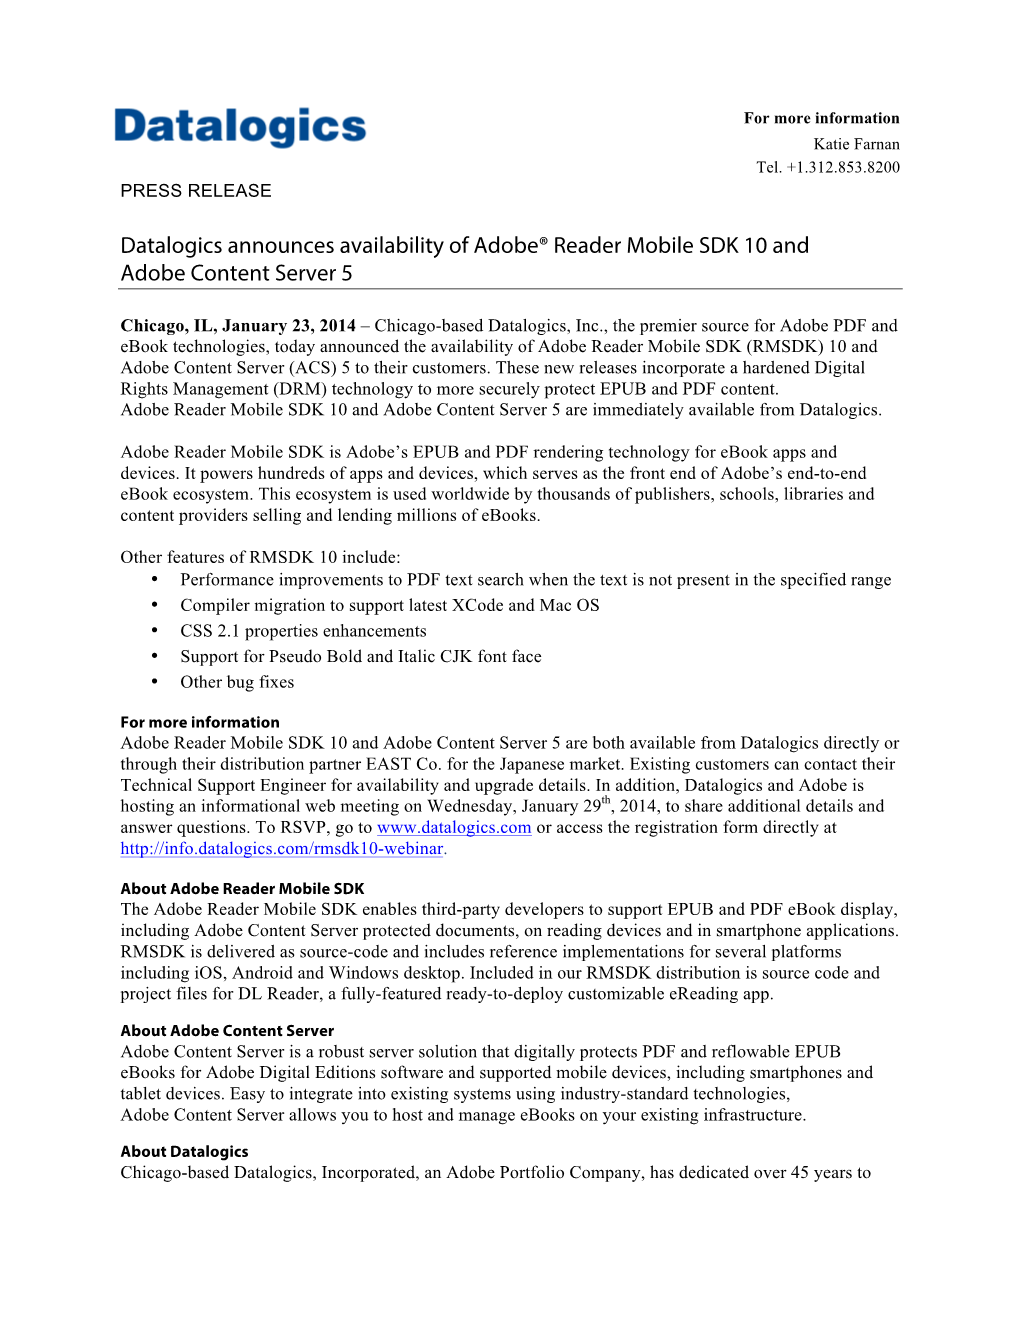 Datalogics Announces Availability of Adobe® Reader Mobile SDK 10 and Adobe Content Server 5